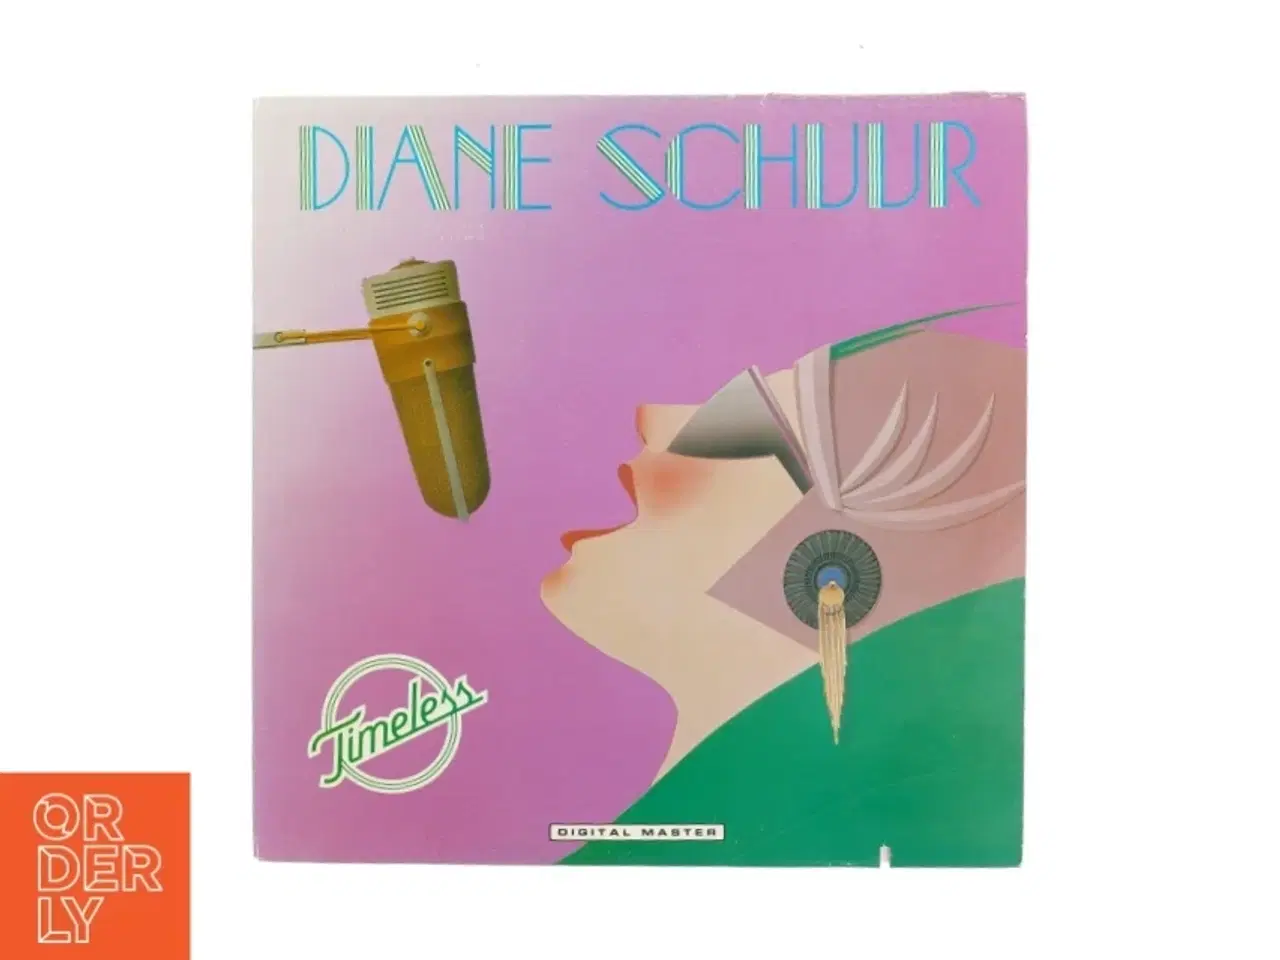 Billede 1 - Diane Schuur Timeless Vinylplade